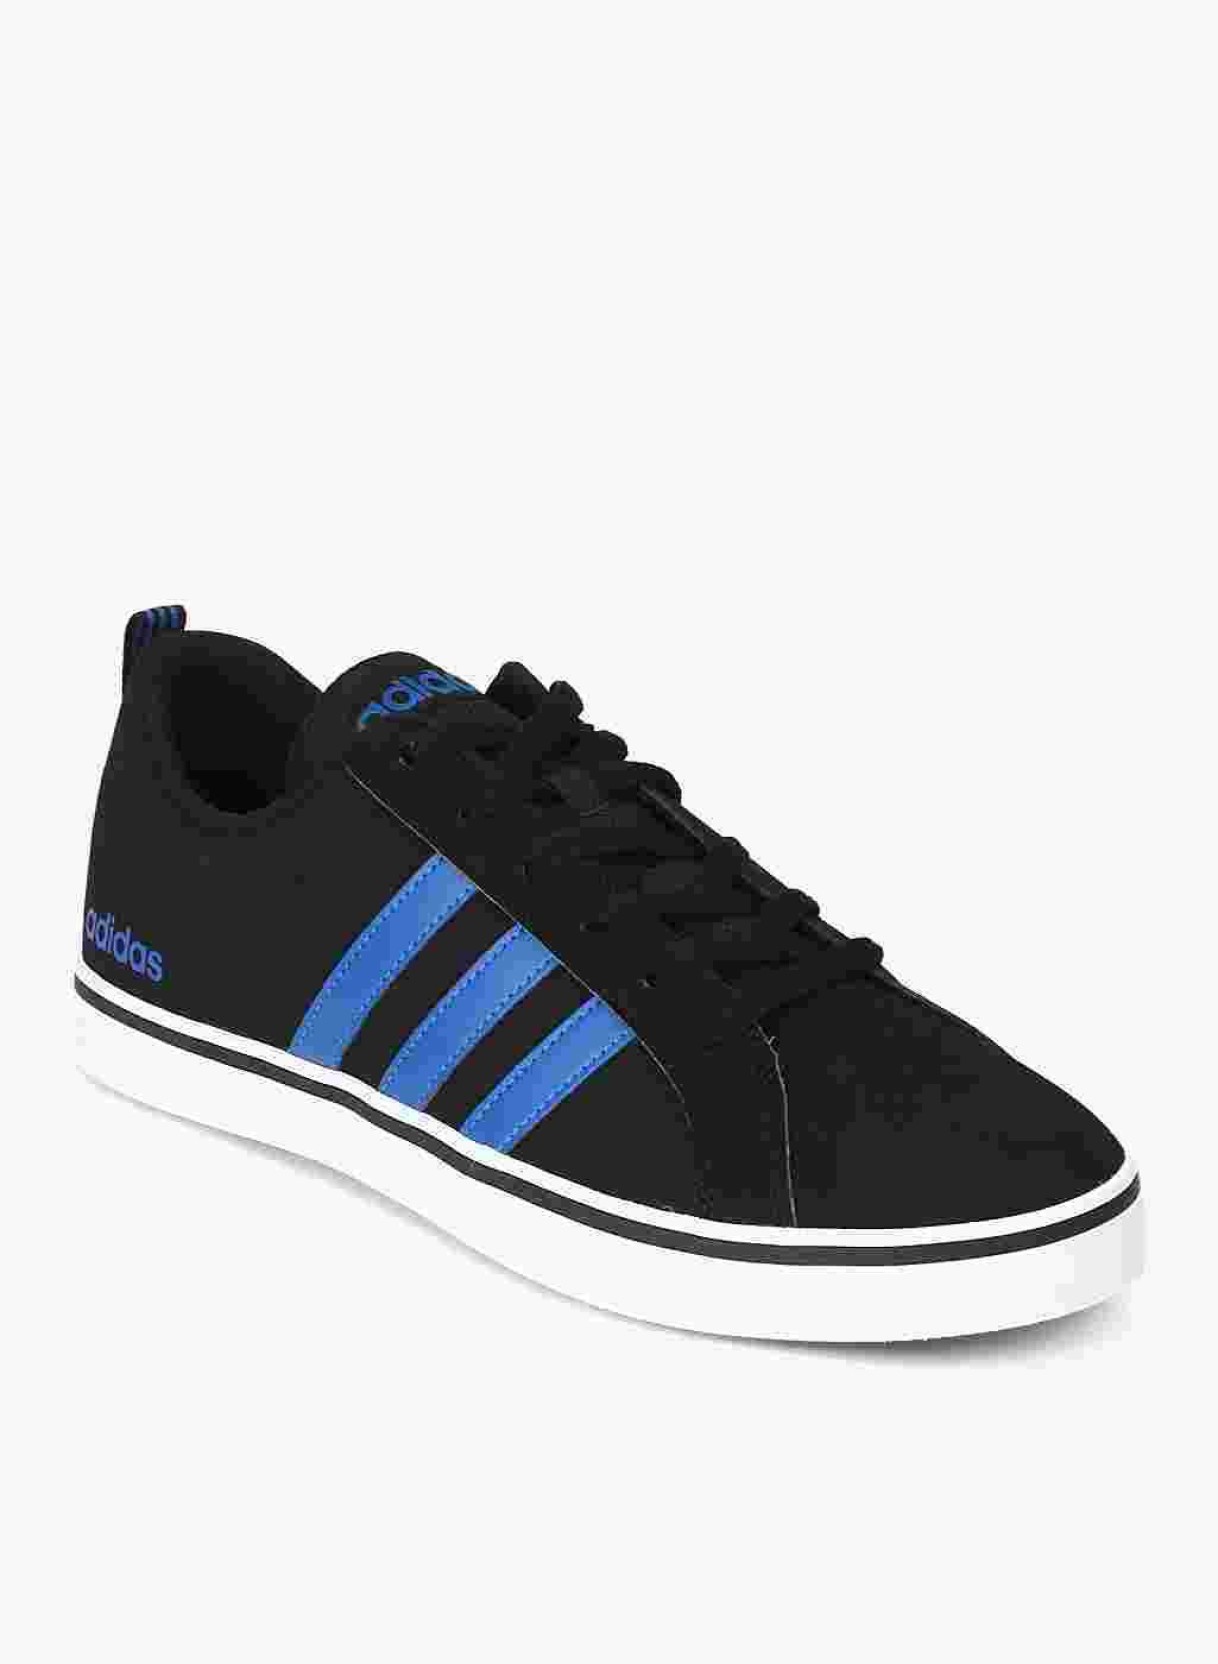 adidas neo black and blue